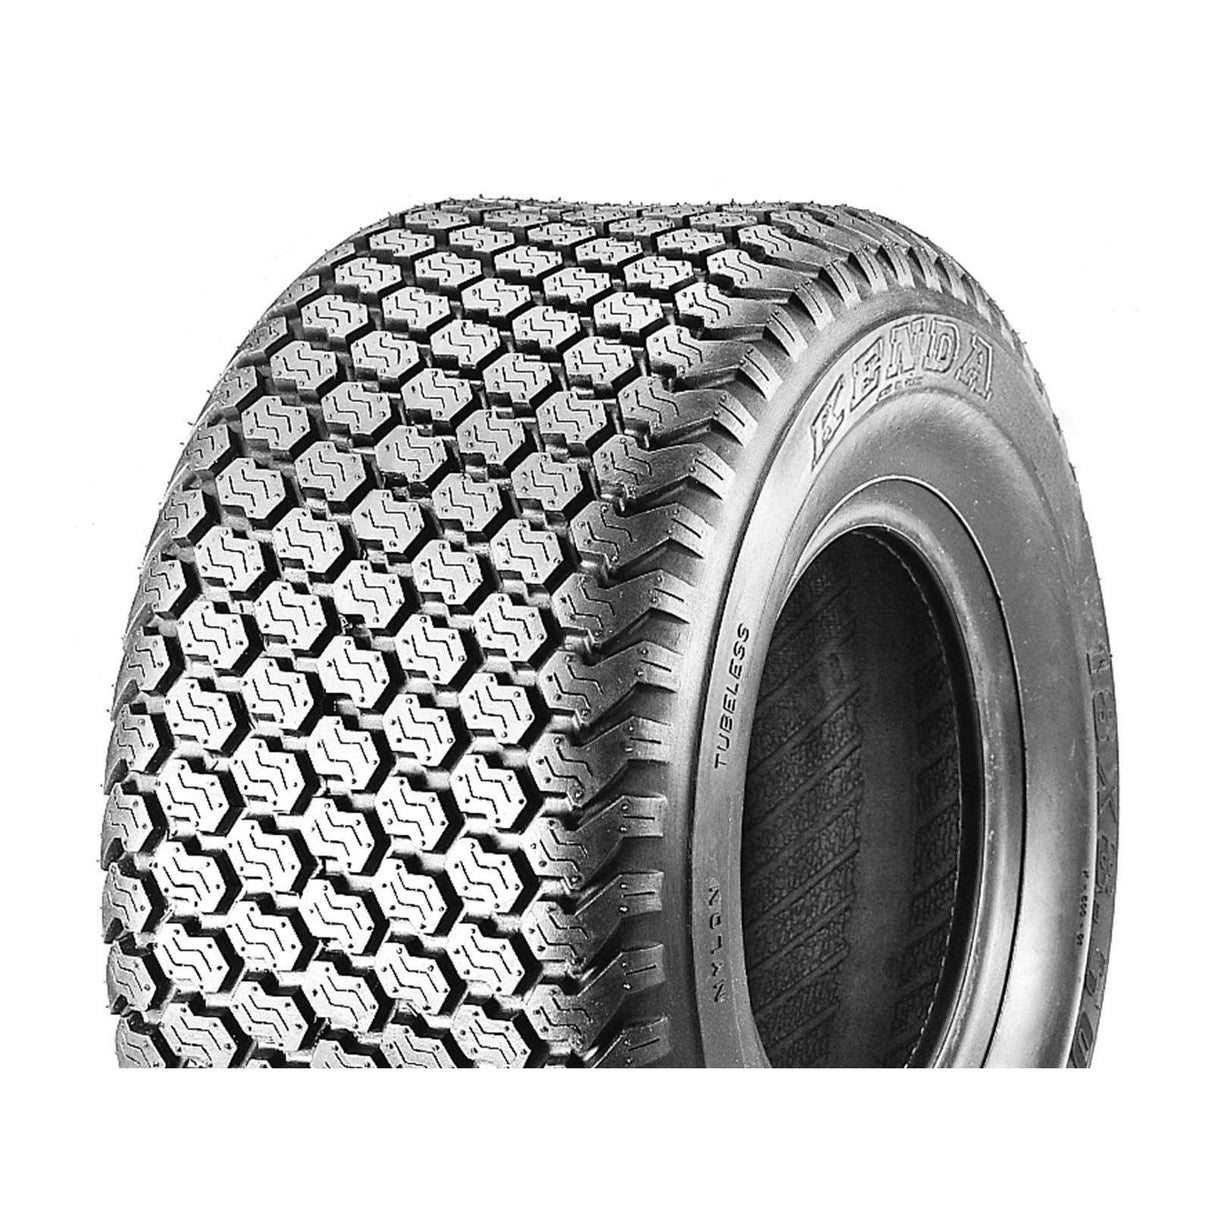 22x9.50-12 K500 (4 PLY) Kenda Super Turf Mower Tyre